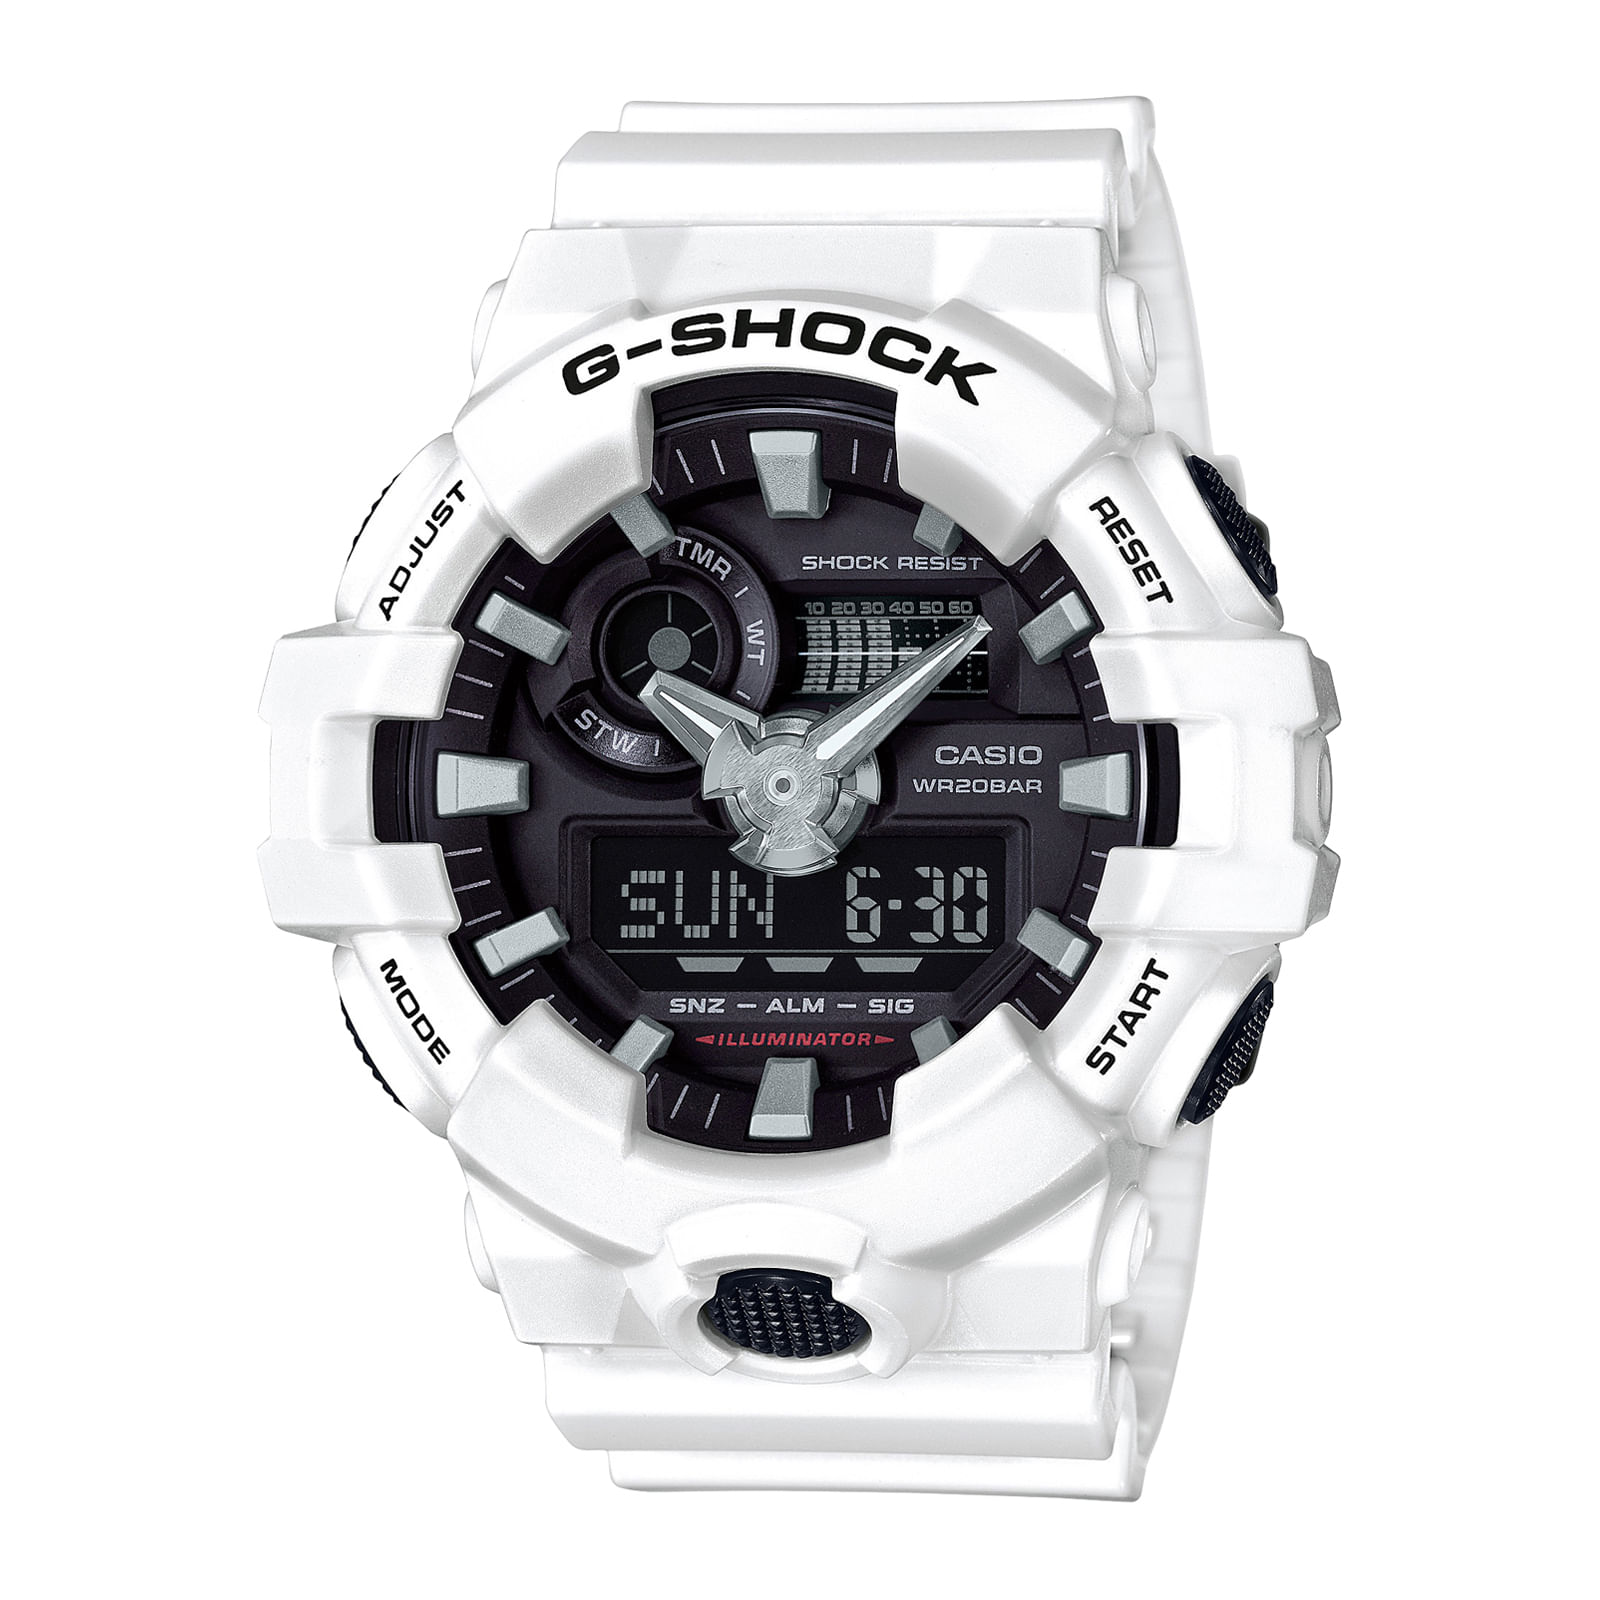 Reloj G-SHOCK GA-700-7A Resina Hombre Blanco - Btime